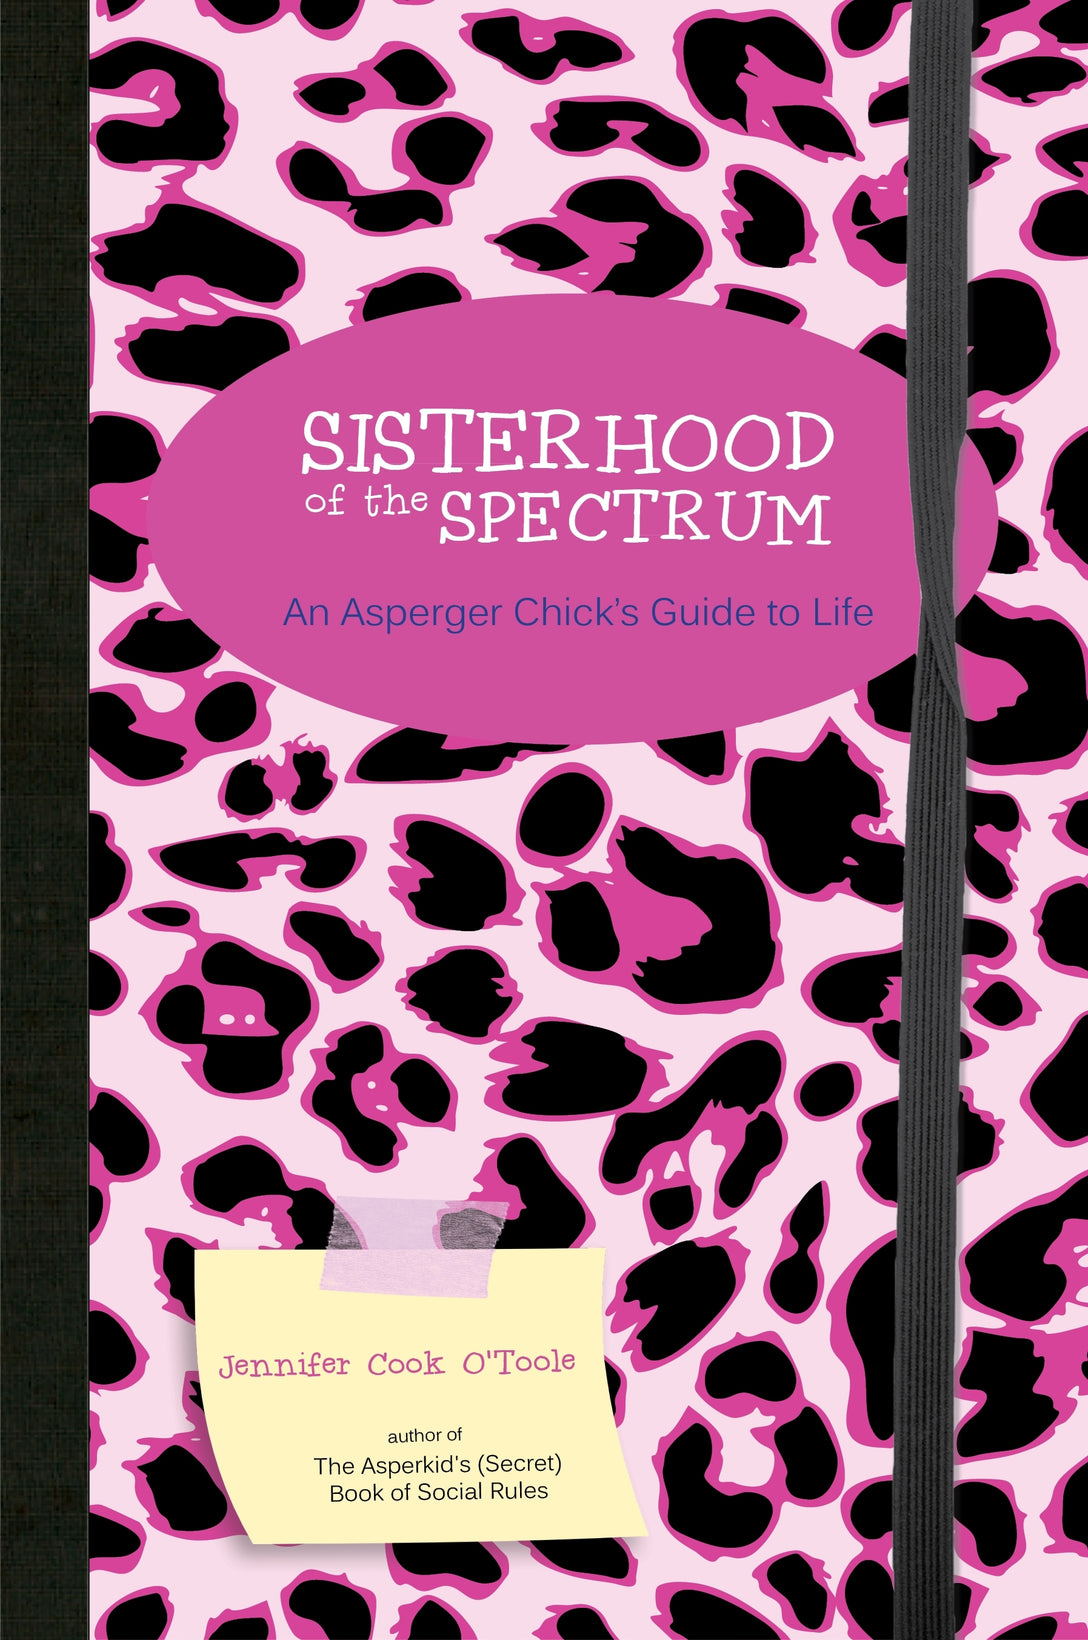 Sisterhood of the Spectrum by Anne-Louise Richards, Jennifer Cook